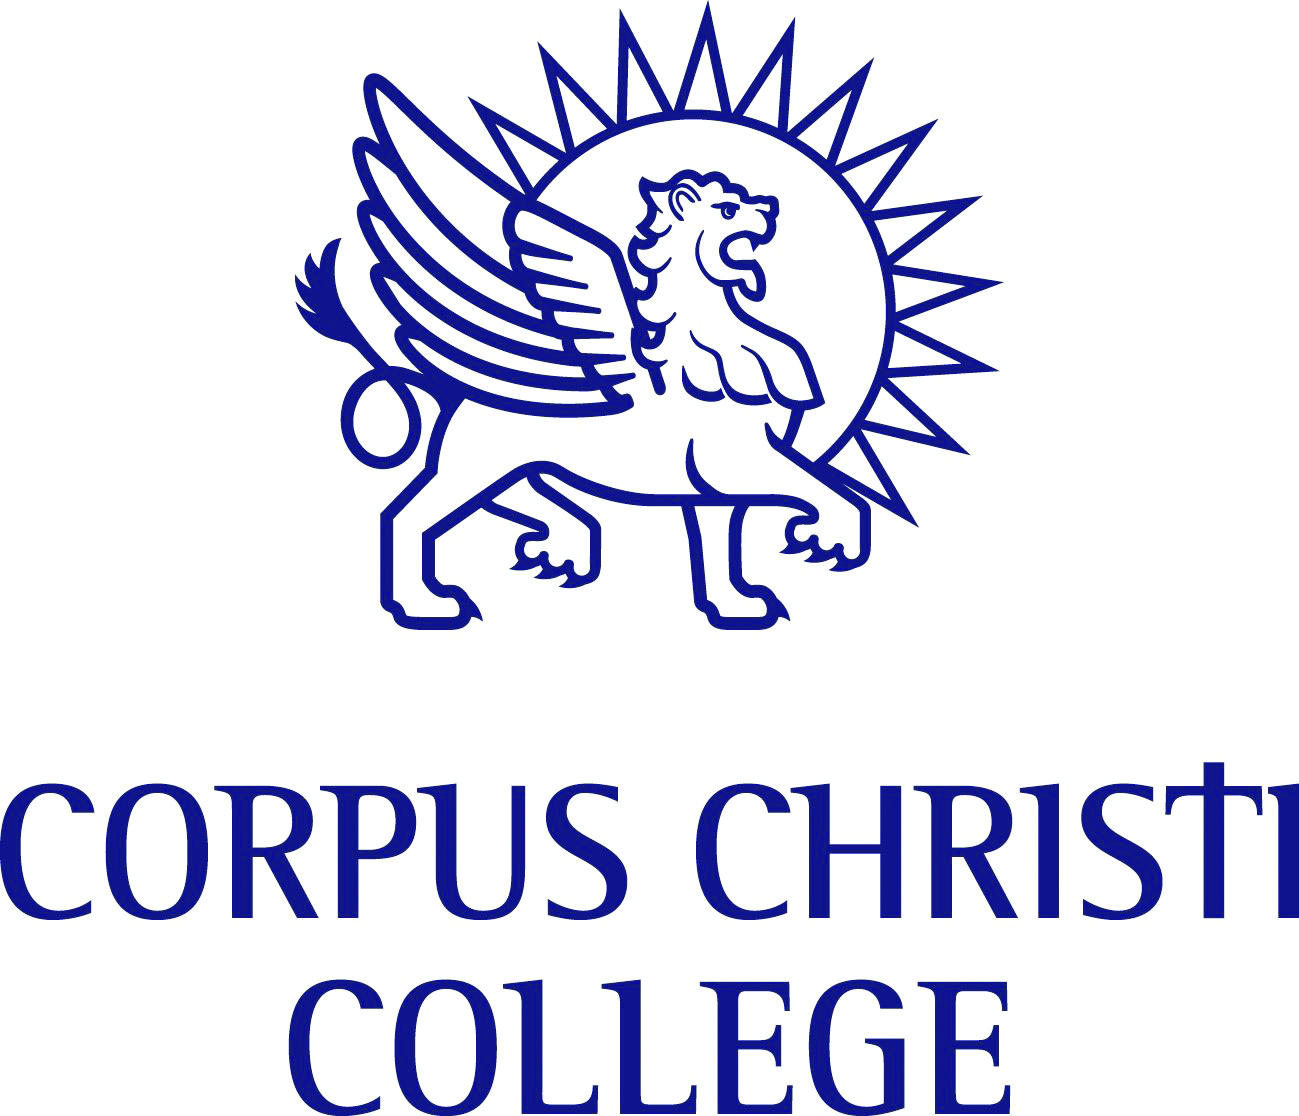 Corpus Christi College